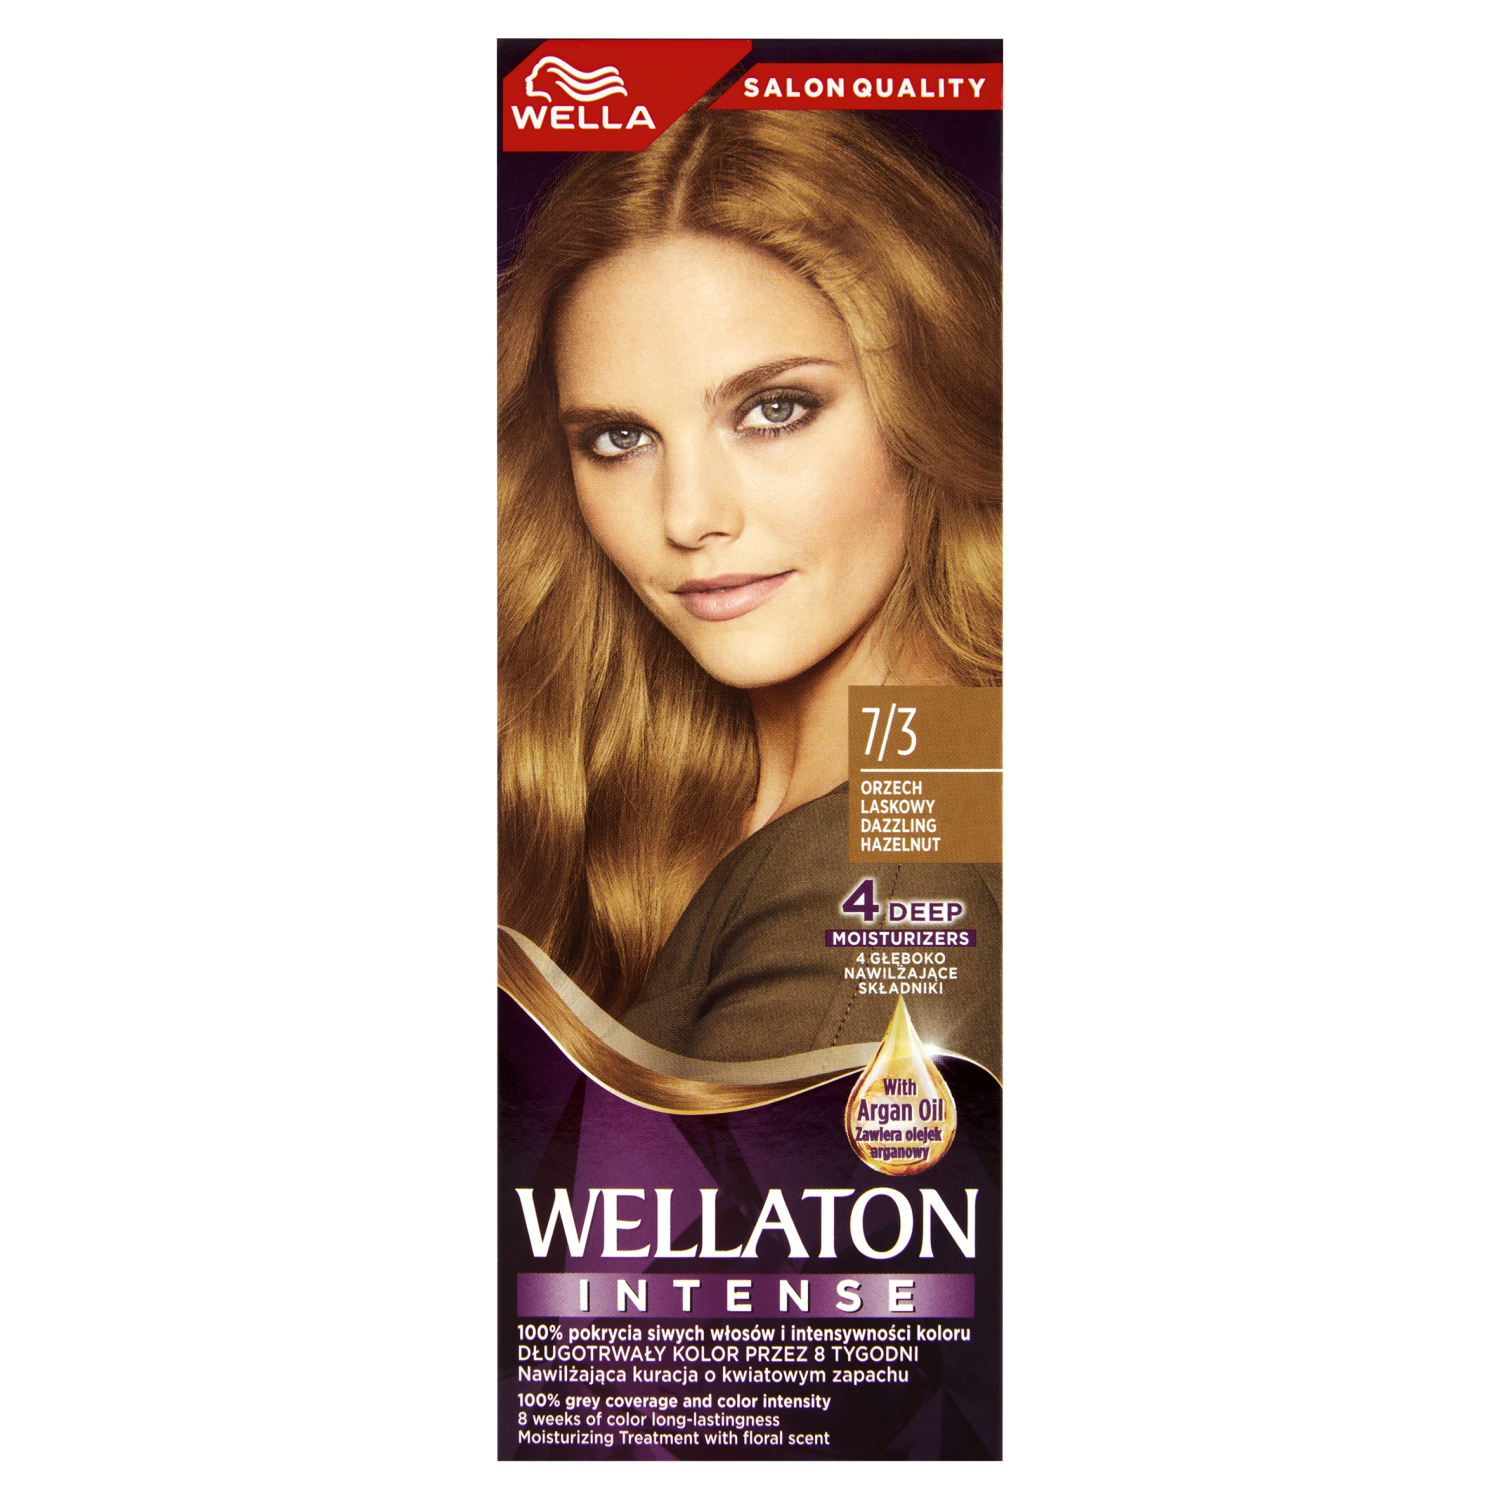 Крем-краска для волос 7/3 лесной орех wella wellaton intense Wella Ton Intense, 1 упаковка